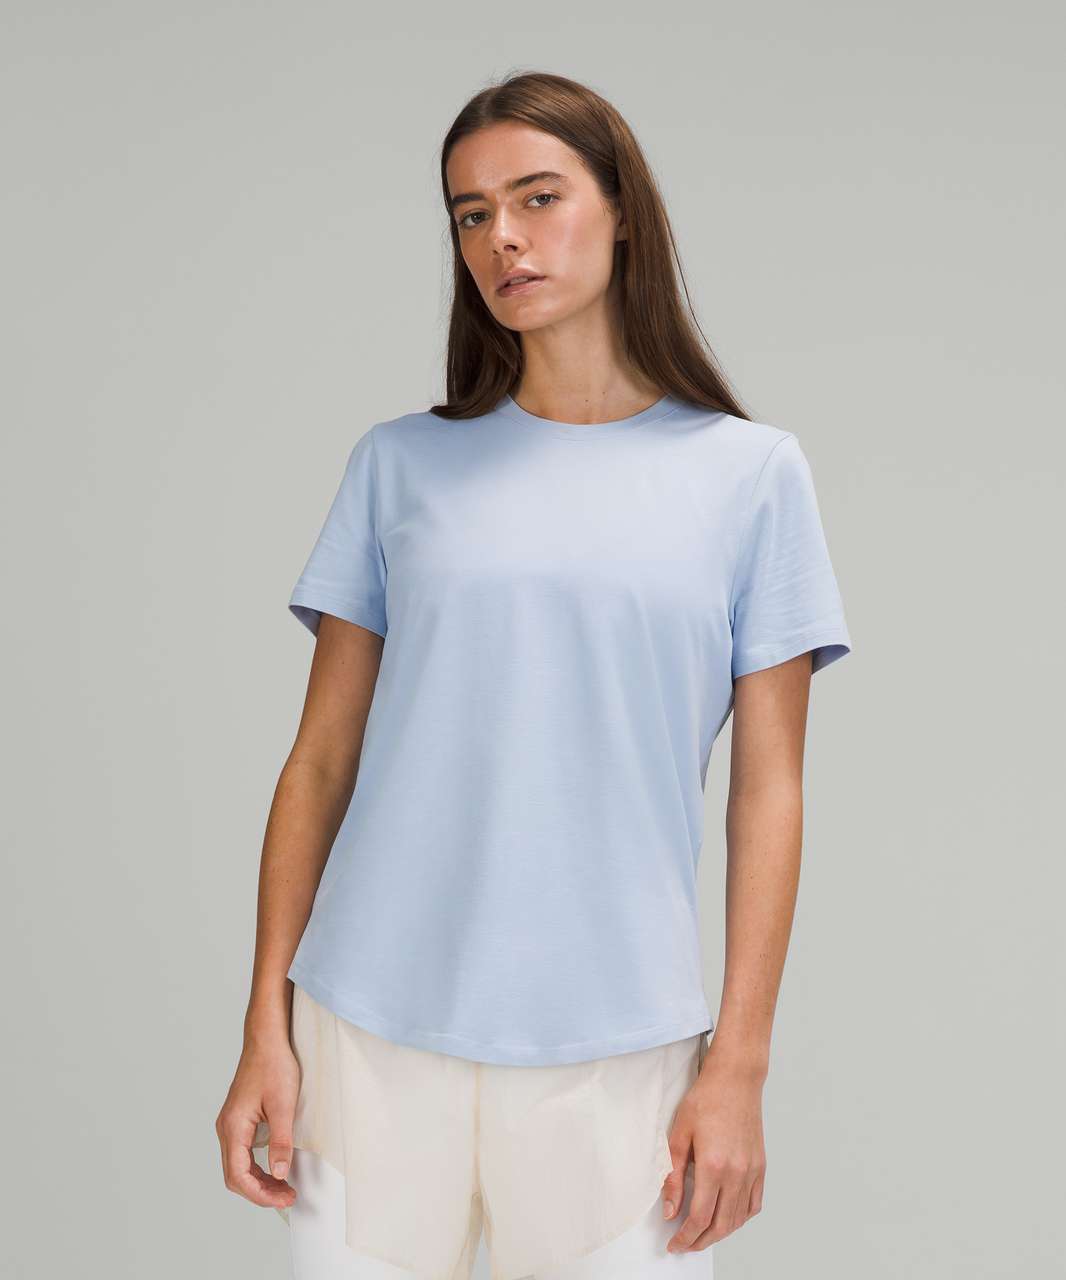 Lululemon Love Crew Short Sleeve T-Shirt - Blue Linen